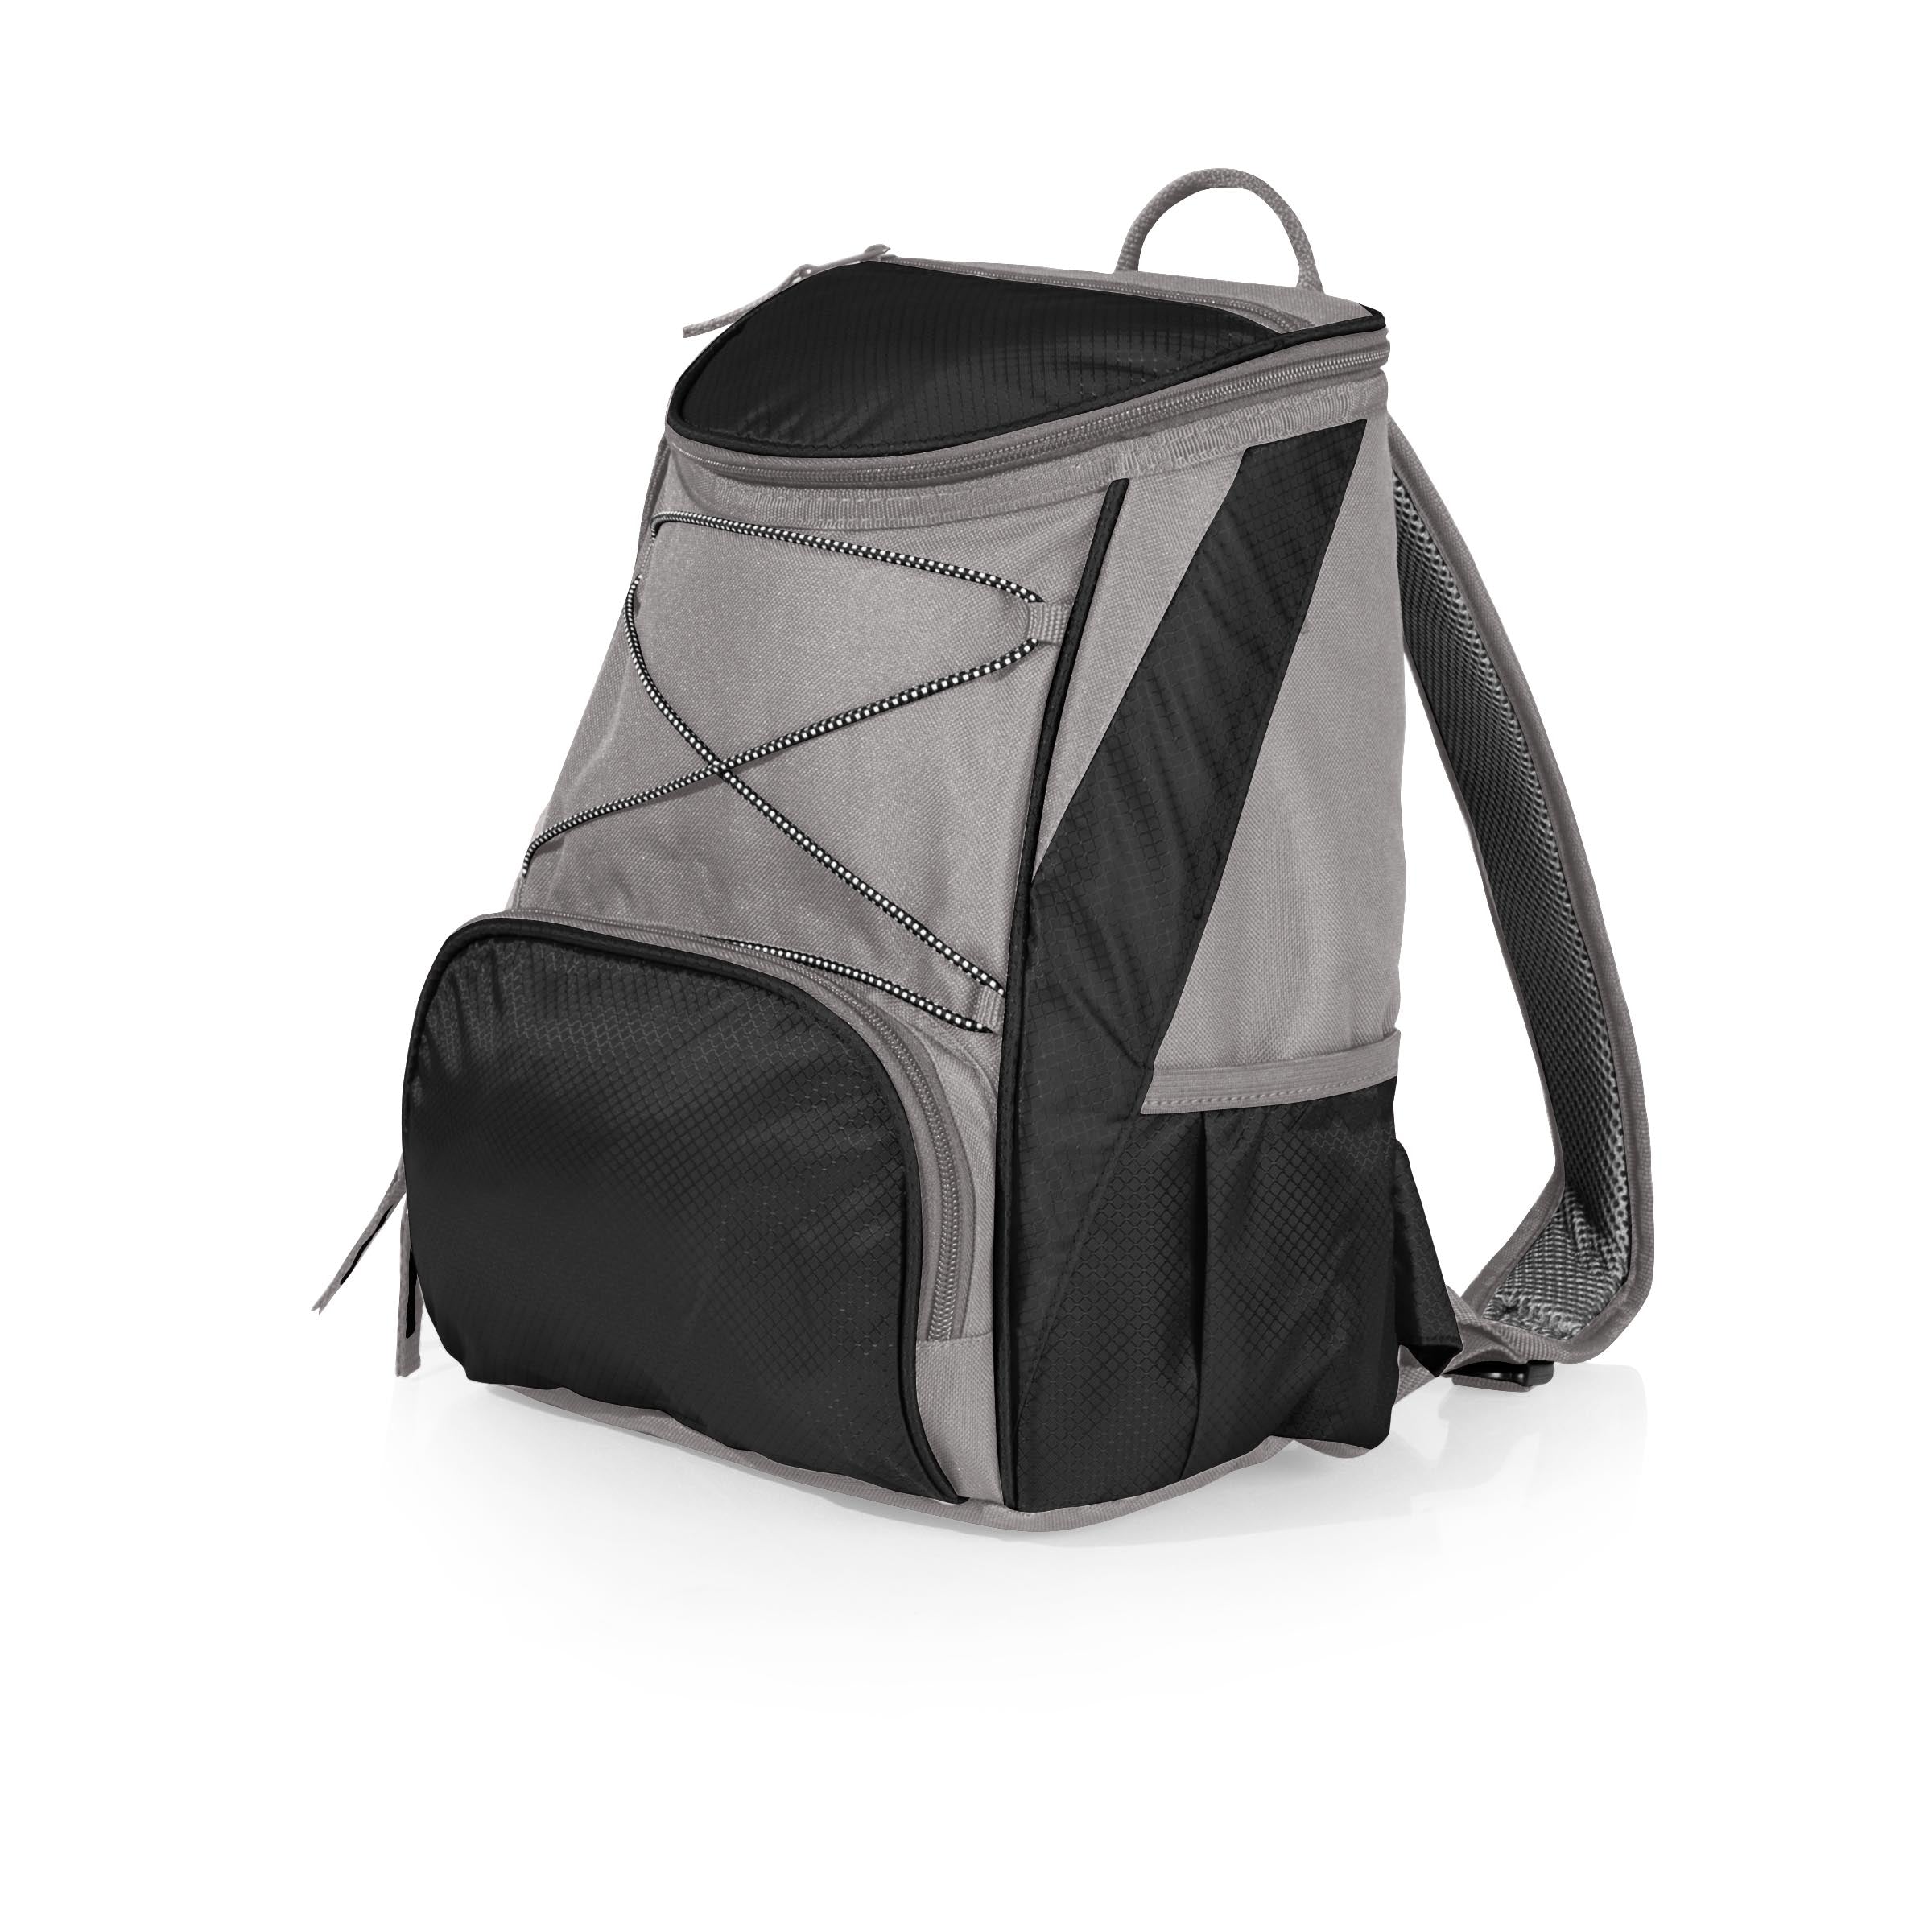 Seattle Kraken - PTX Backpack Cooler